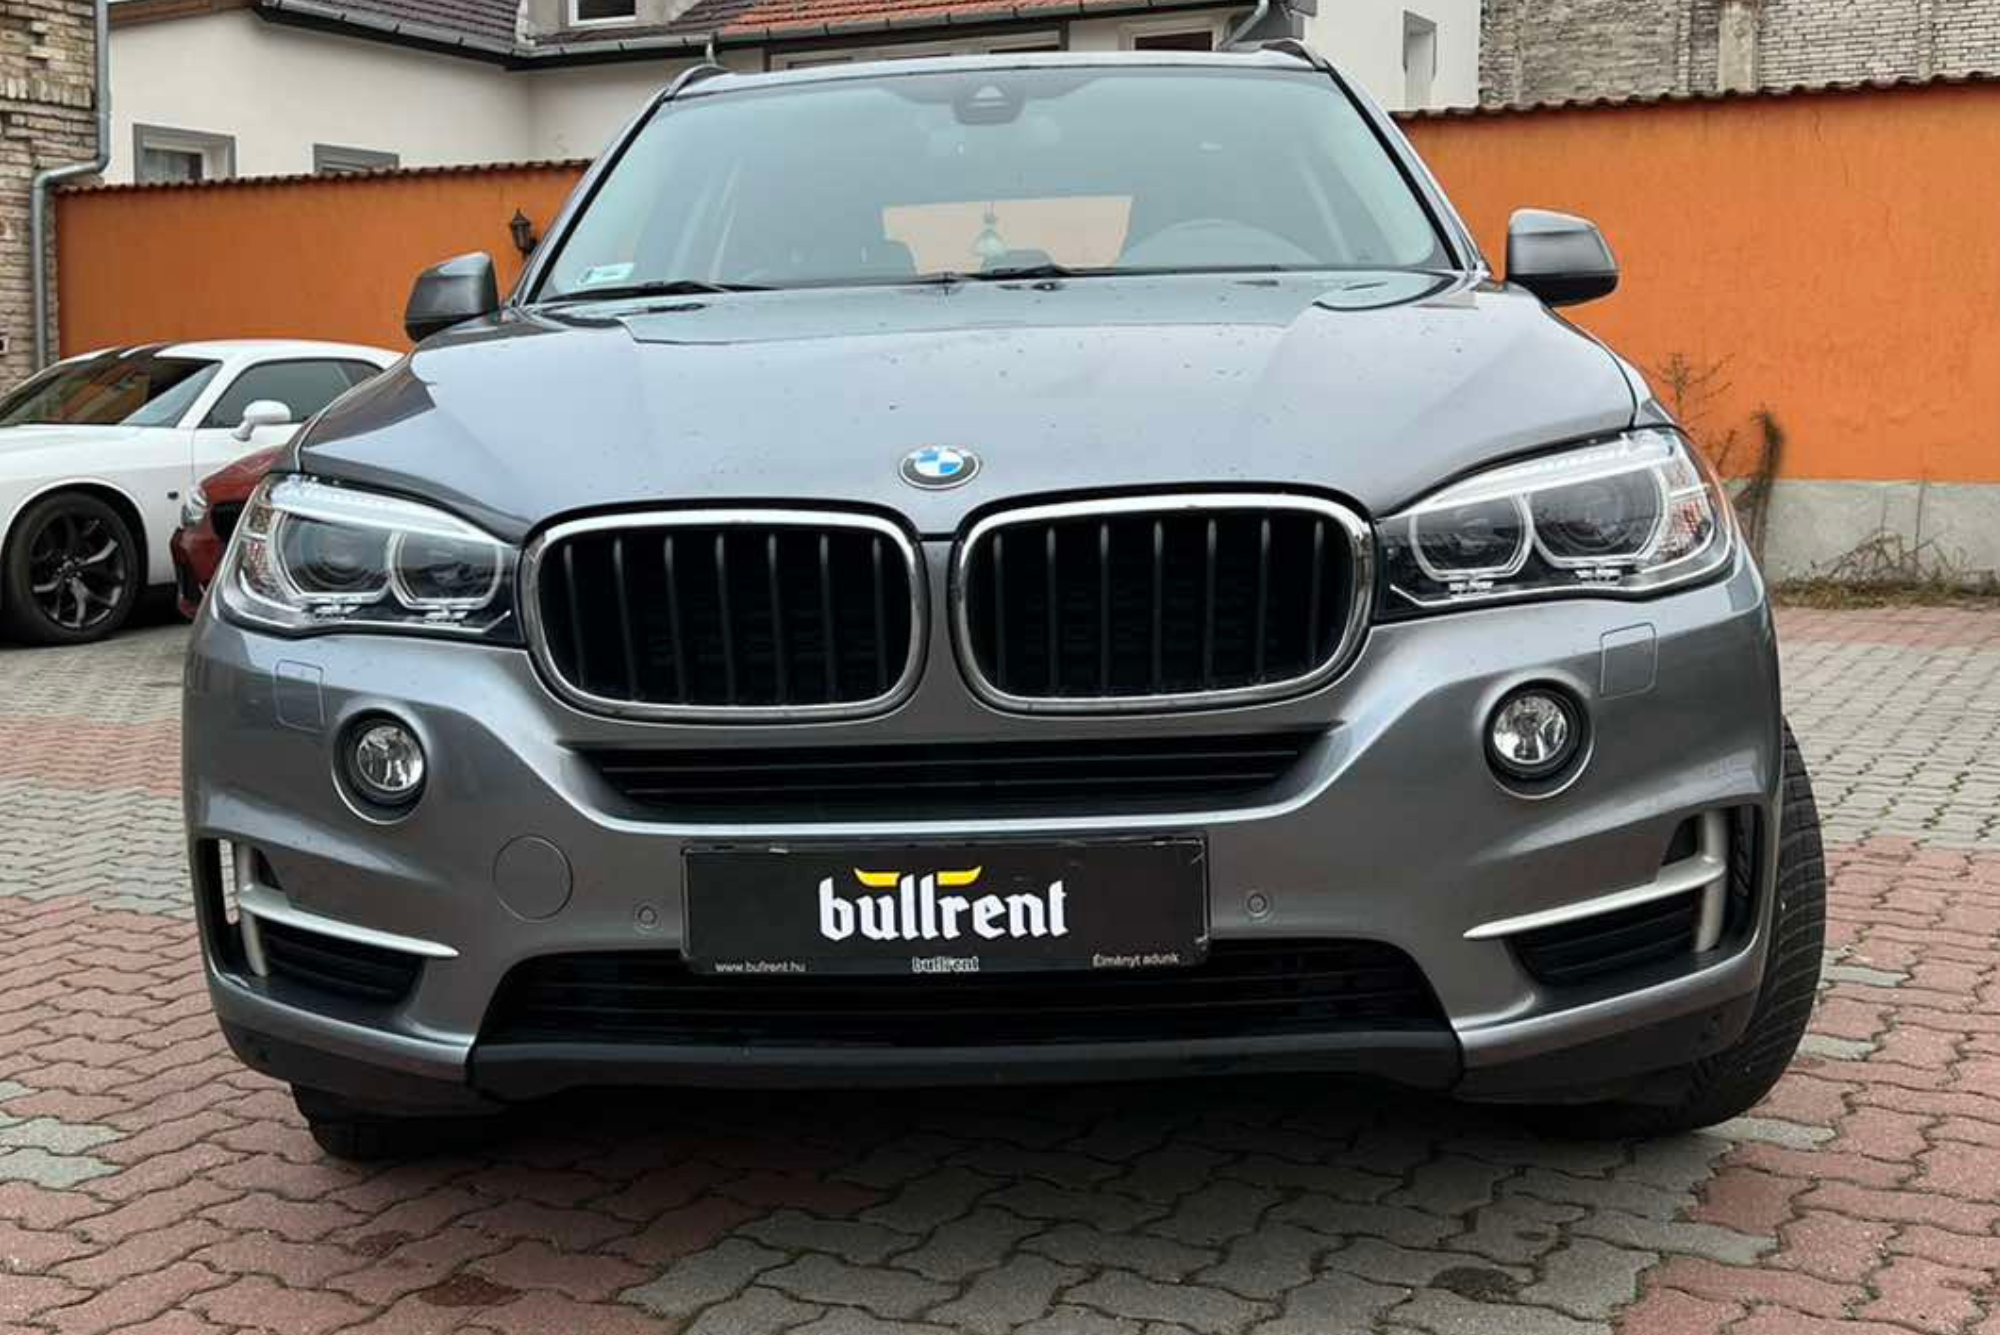 BMW X5 30D Bullrent autóbérlés tartósbérlet